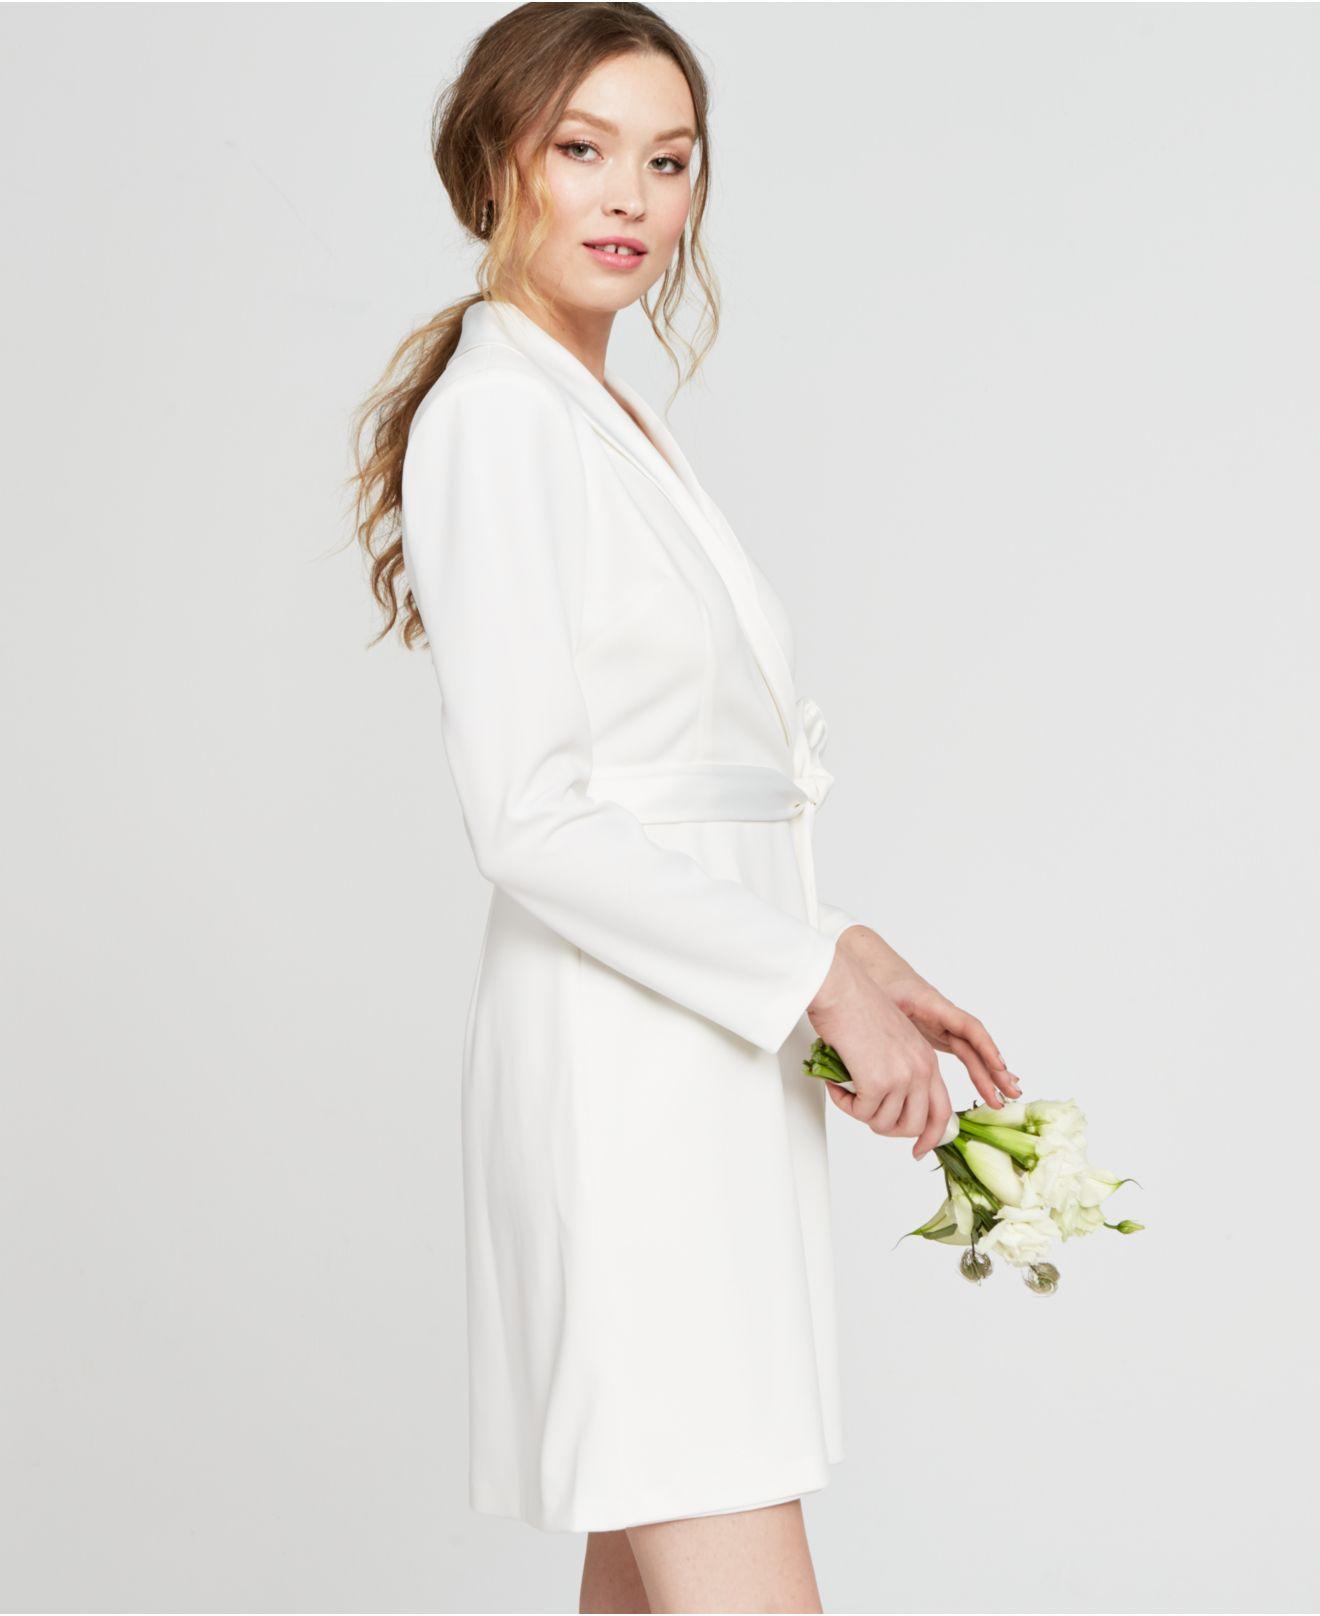 Adrianna Papell Satin Tuxedo Sheath Dress in Ivory (White) - Lyst